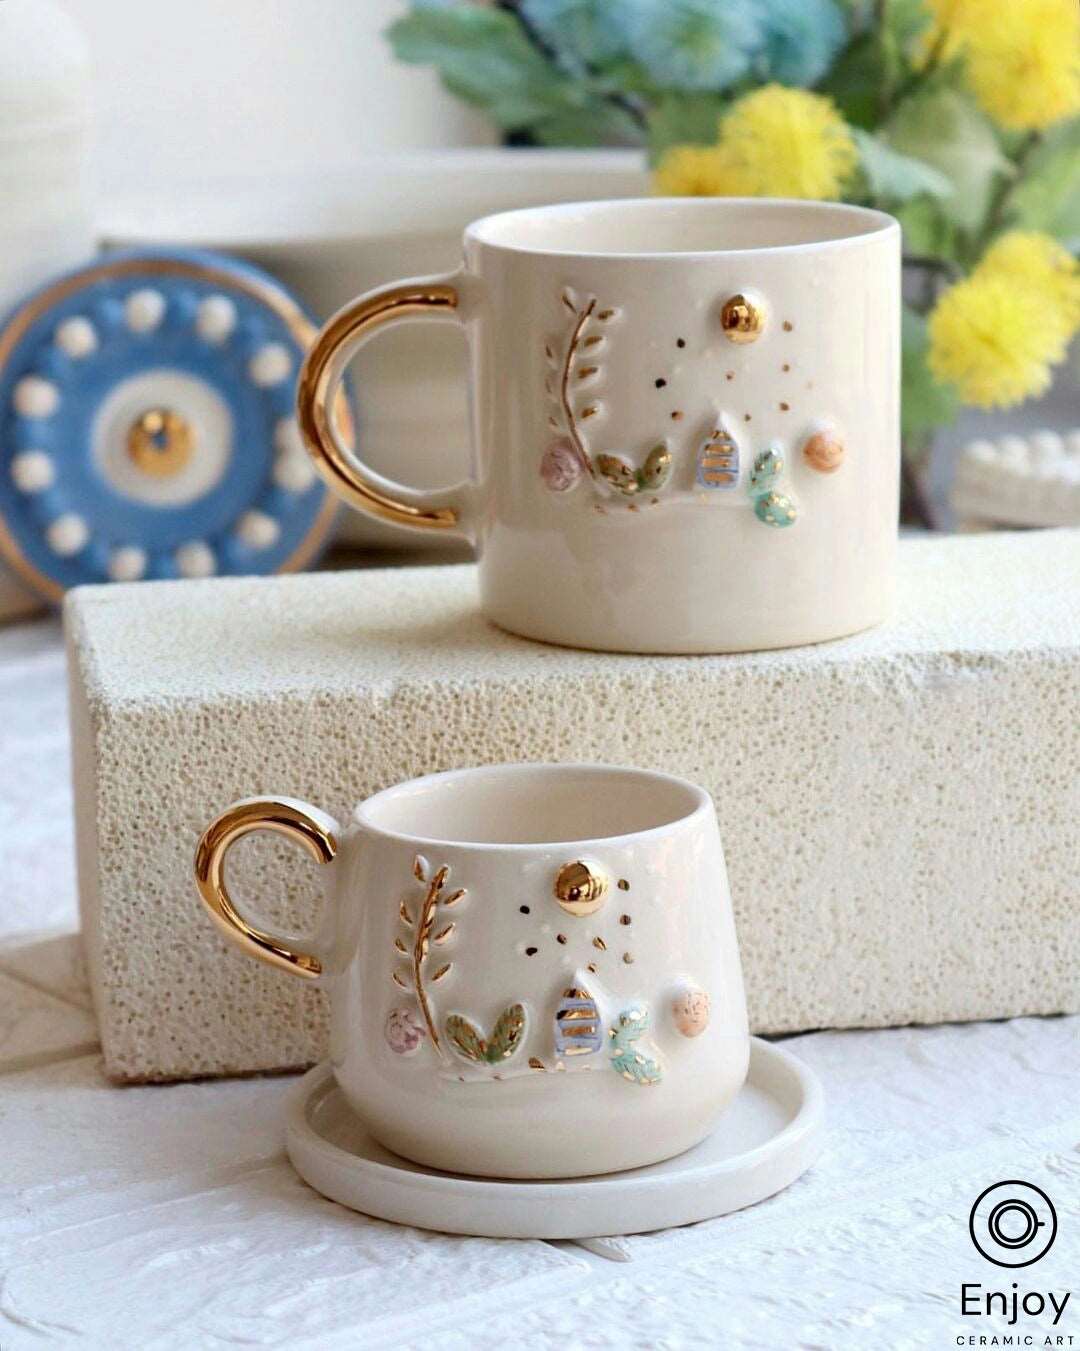  Hello Gorgeous Mug - Handmade Cute Coffee Cups for